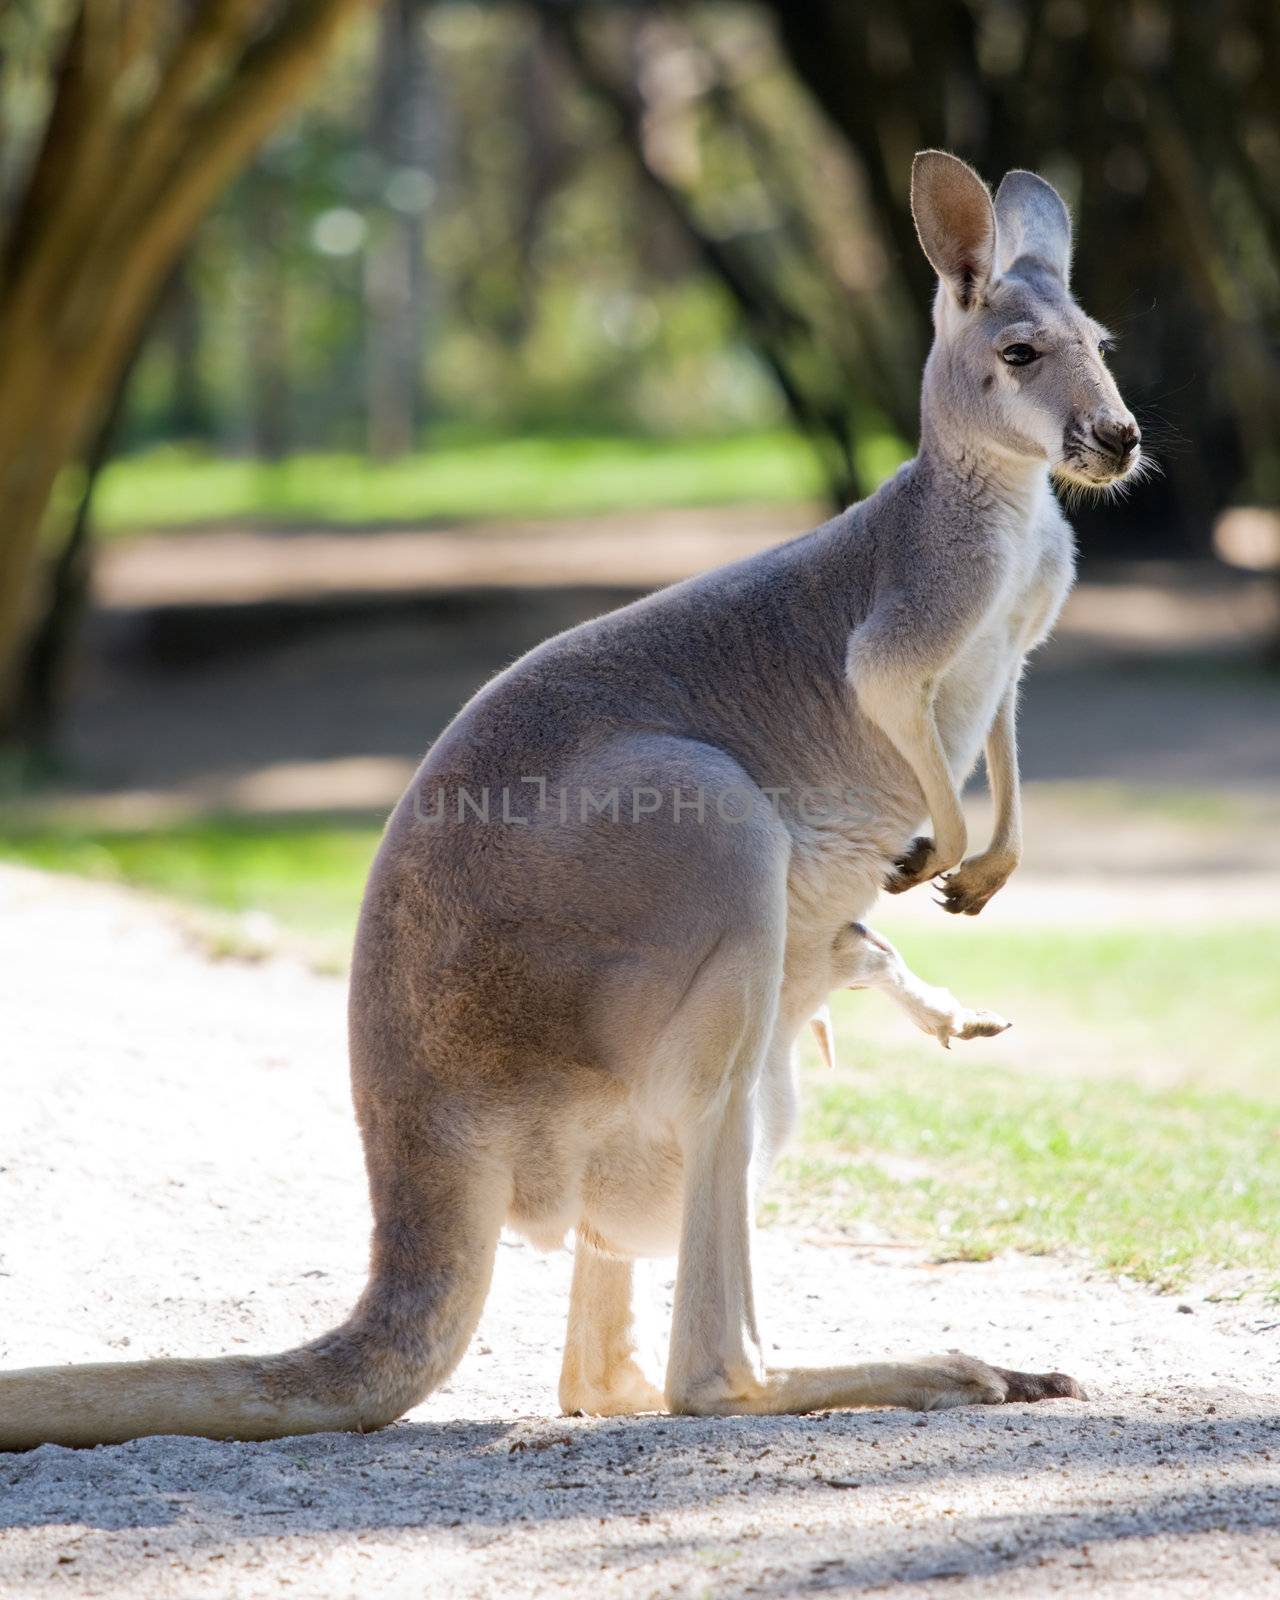 Female red kangaroo at Healesville Sanctuary, Victoria, Australia